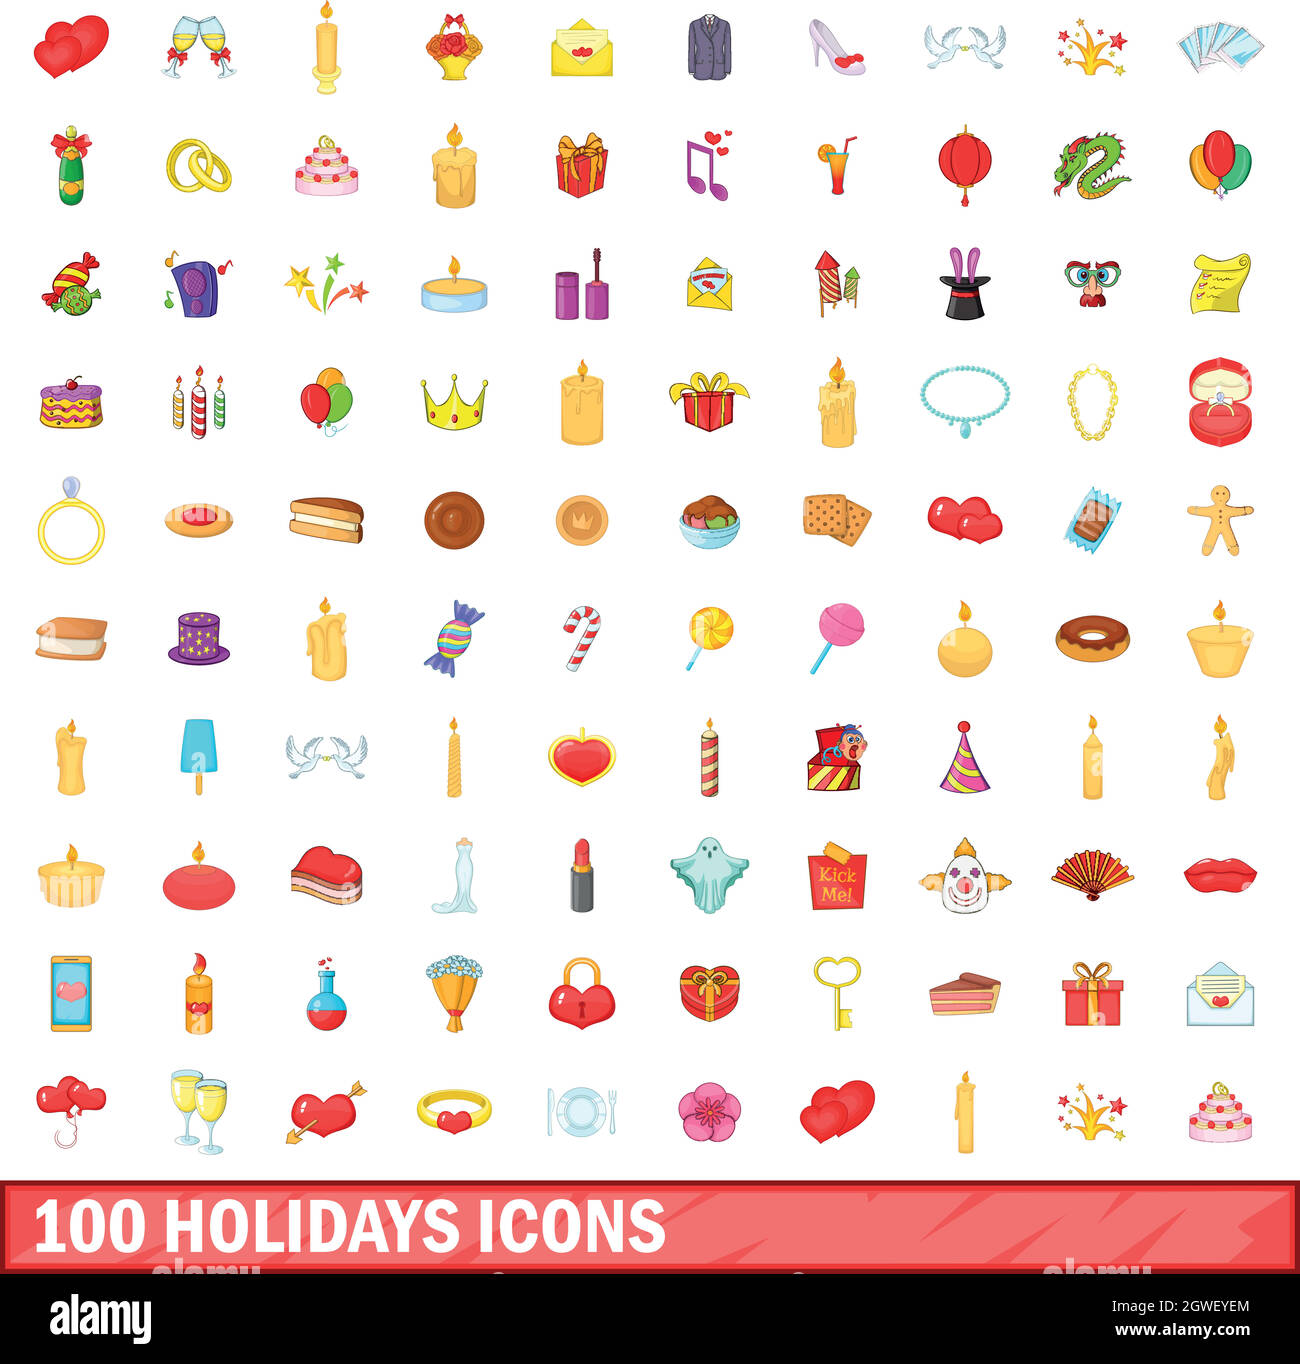 100 holidays icons set, cartoon style Stock Vector